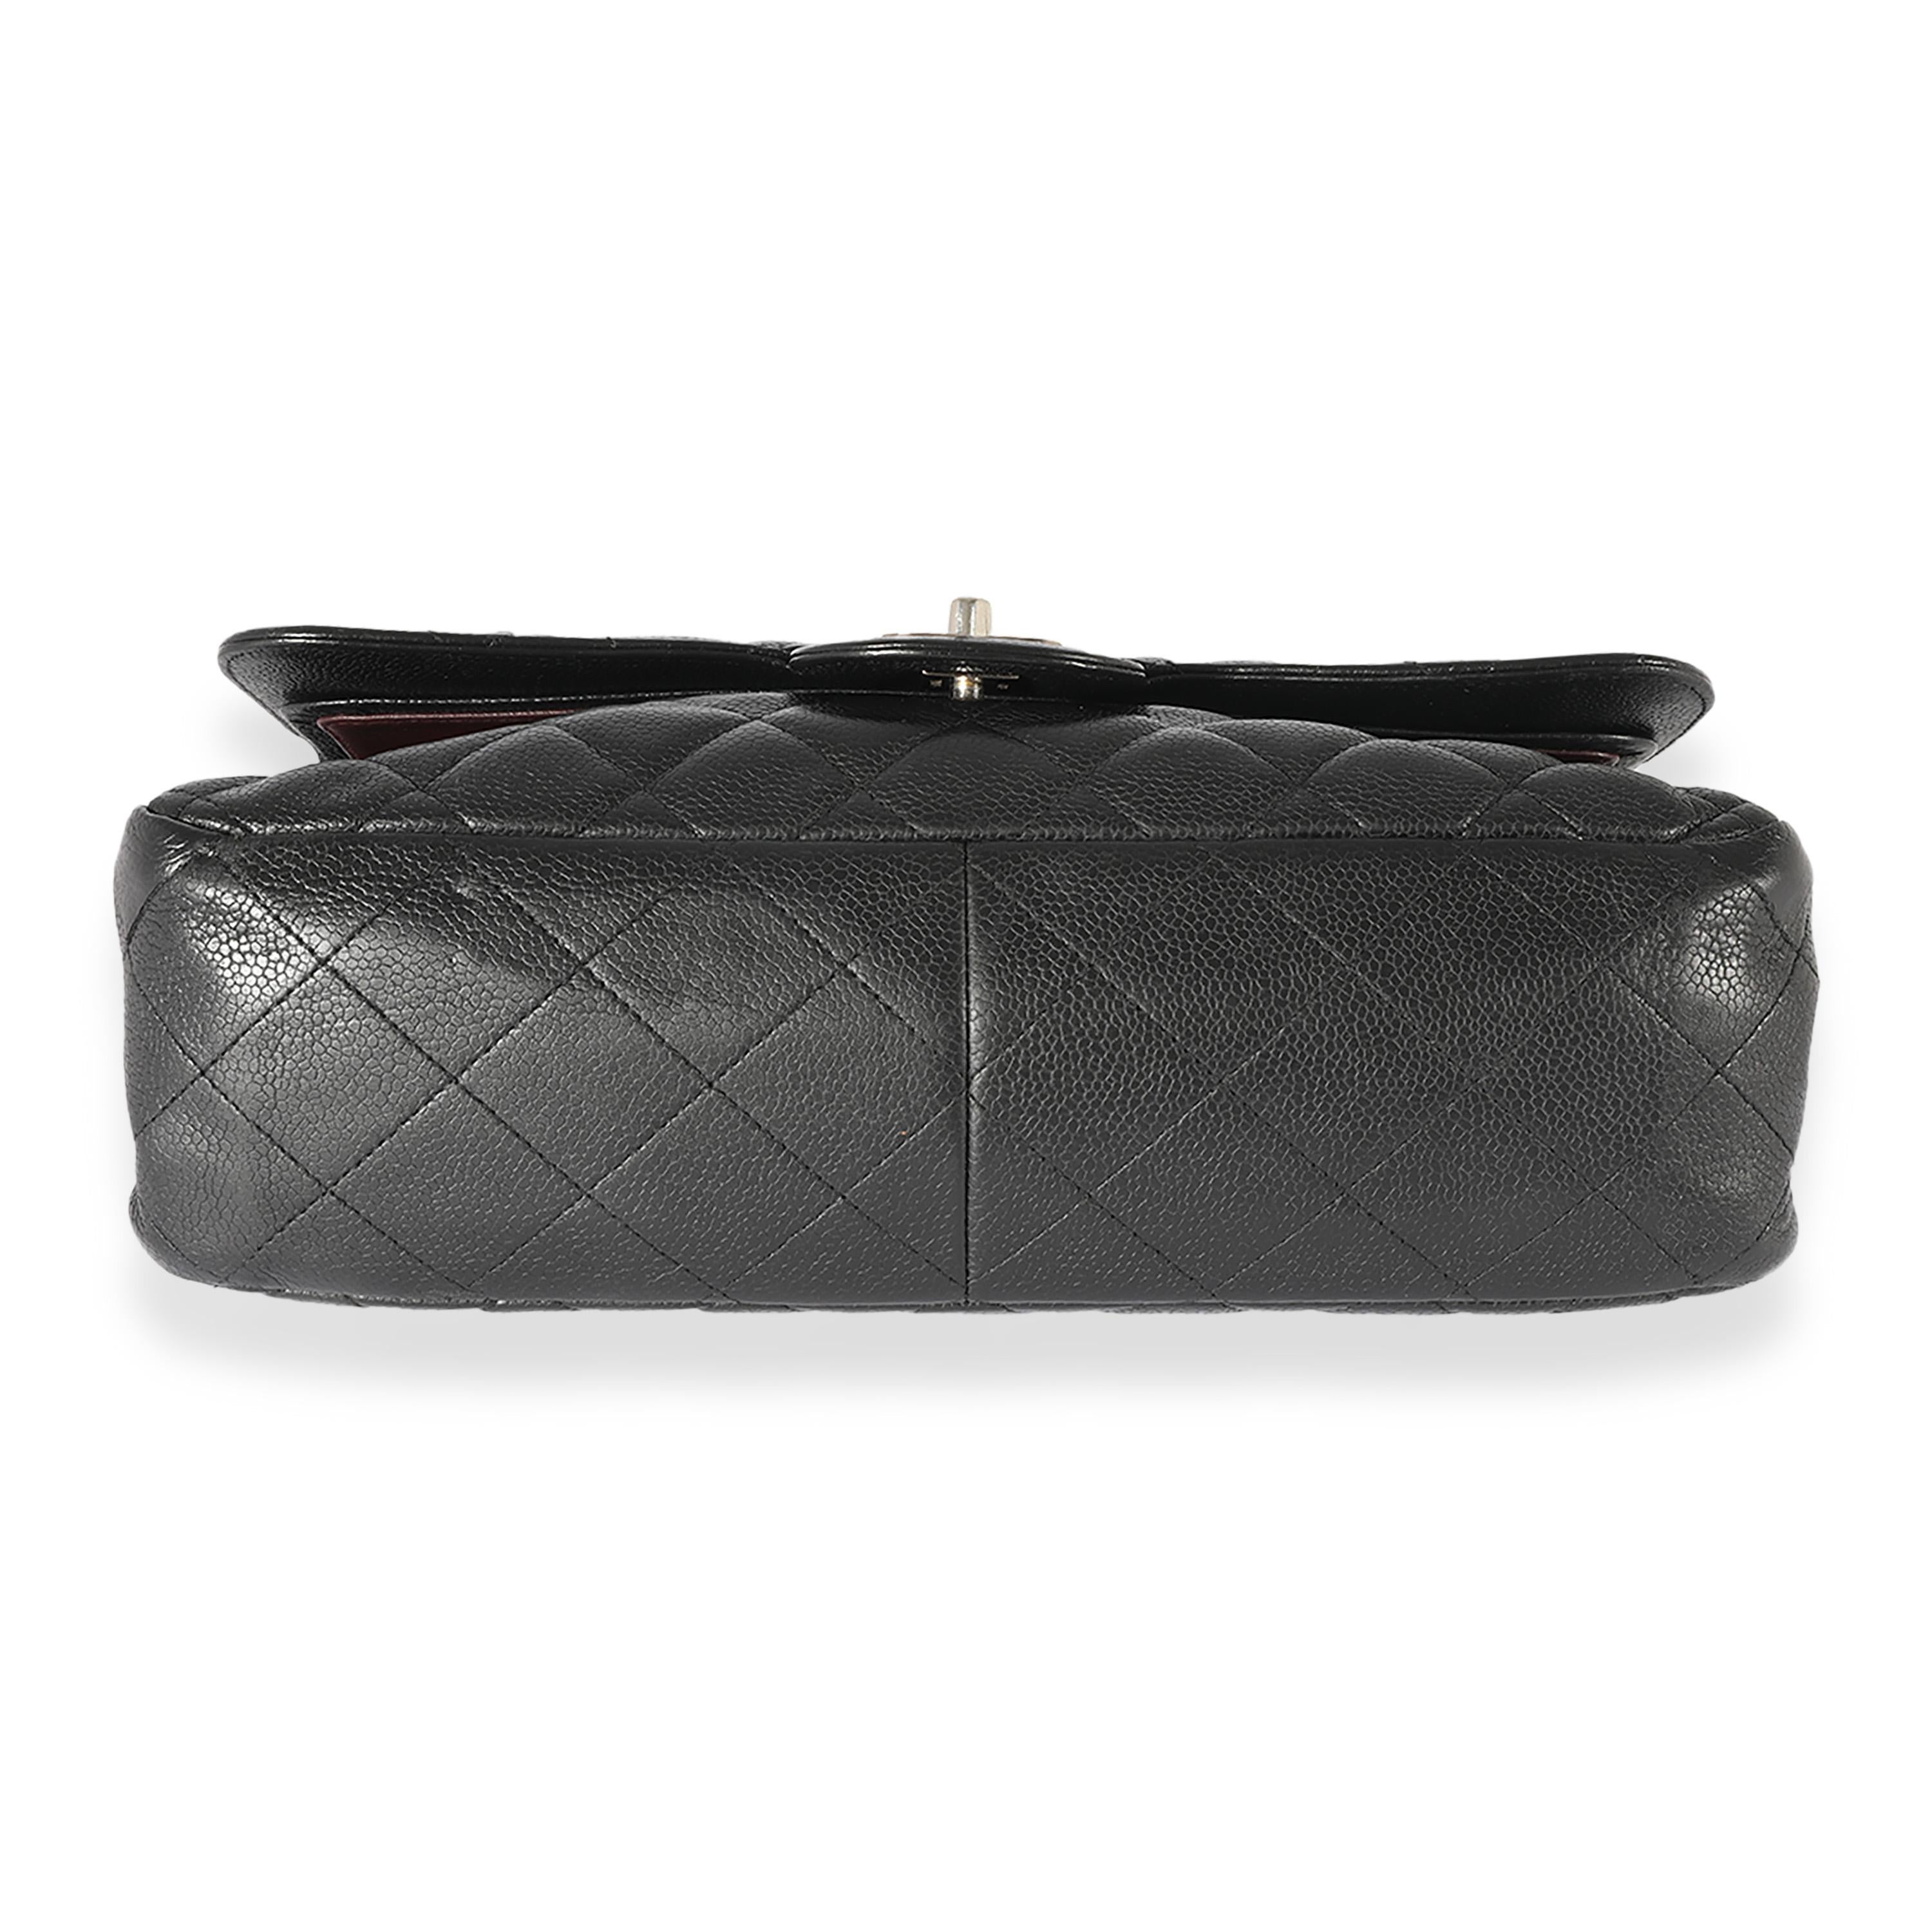 Chanel Black Caviar Leather Jumbo Double Flap Bag For Sale 3